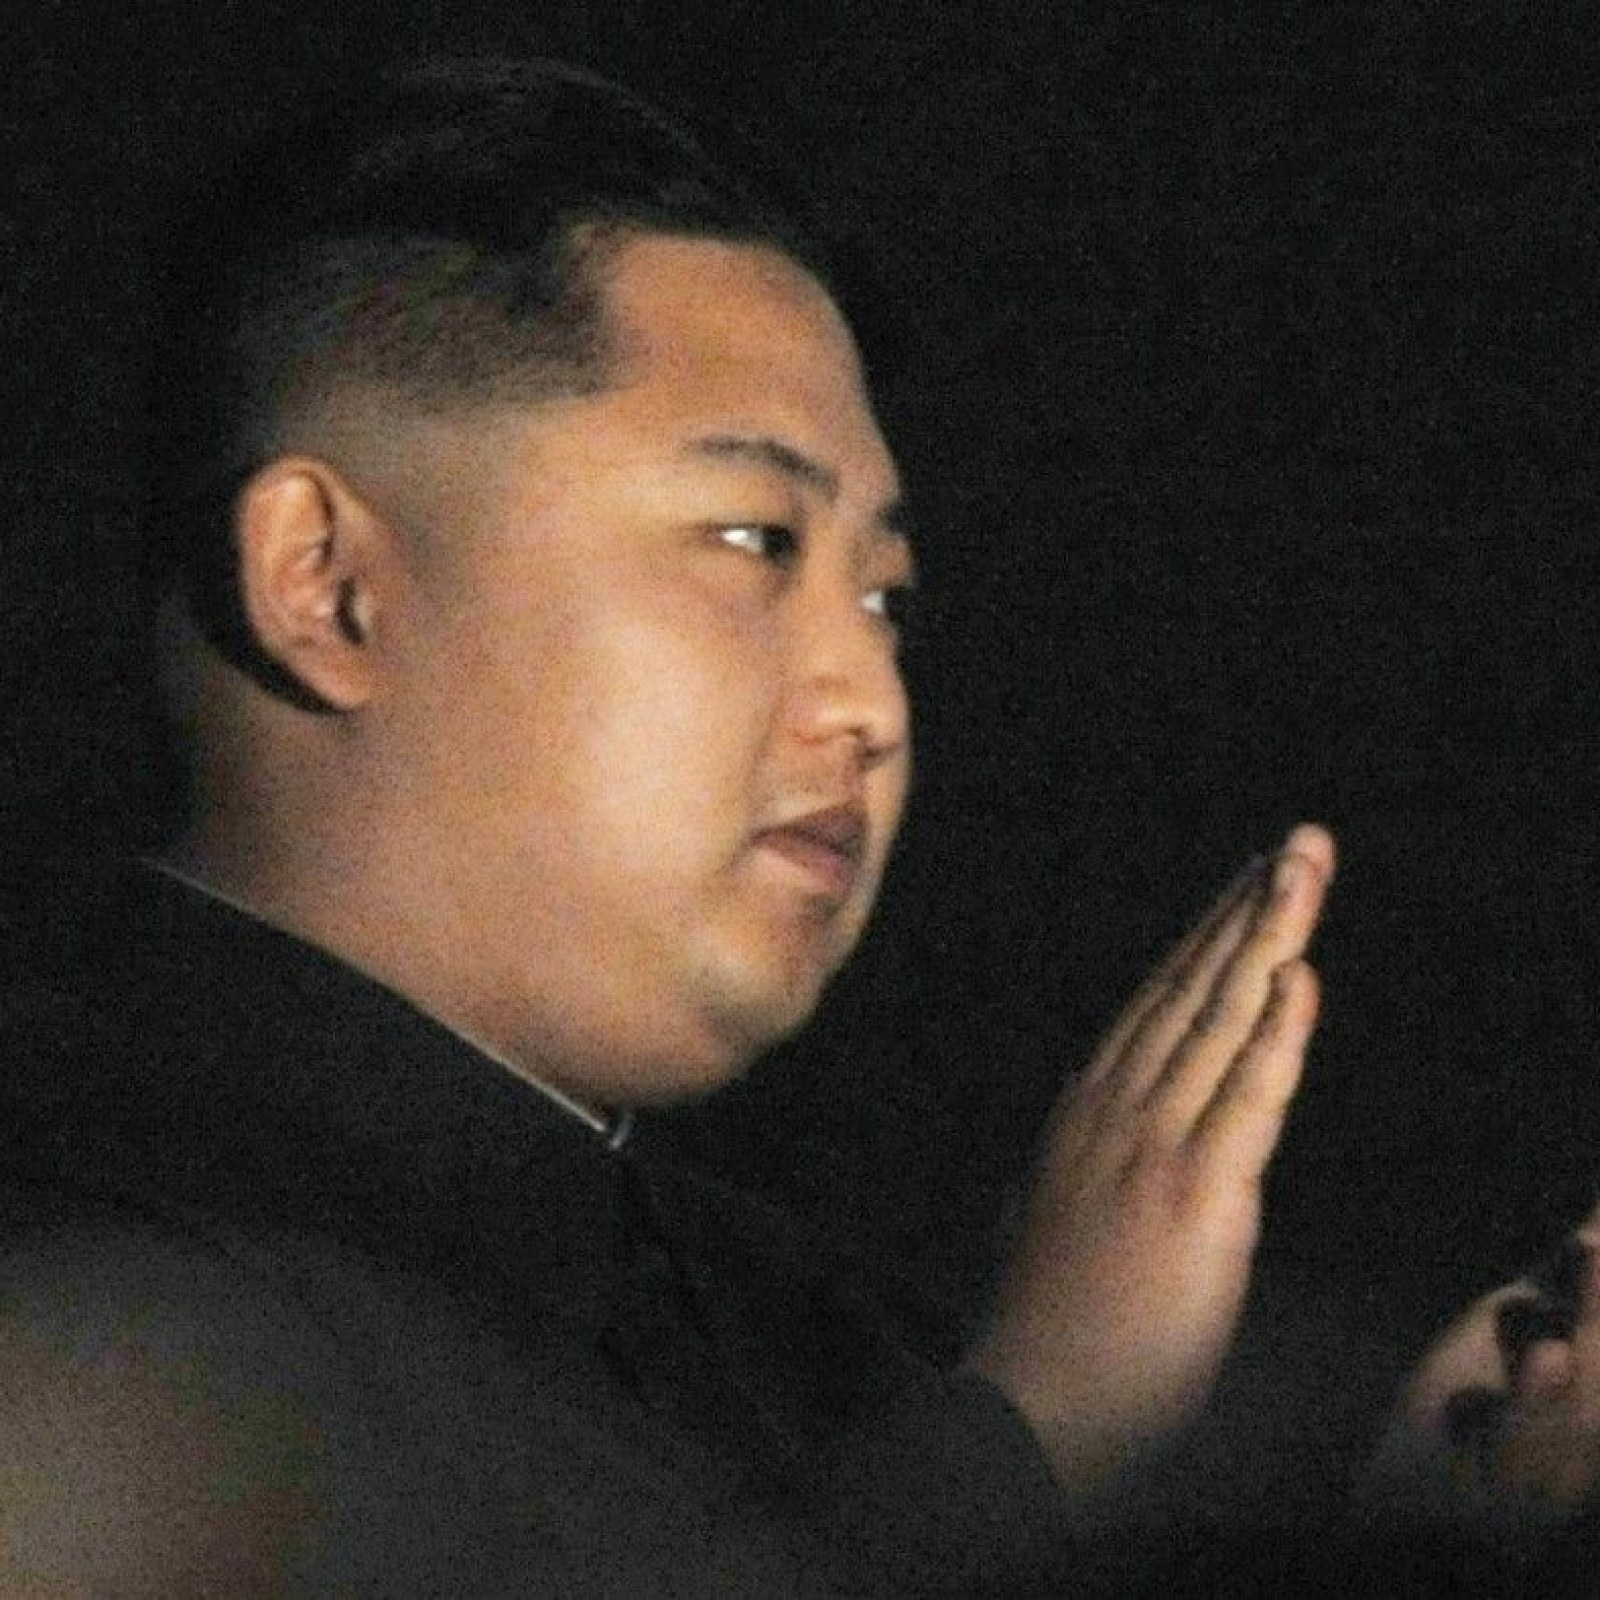 Kim Jong-un: Top 10 Fun Facts about North Korea's New Leader